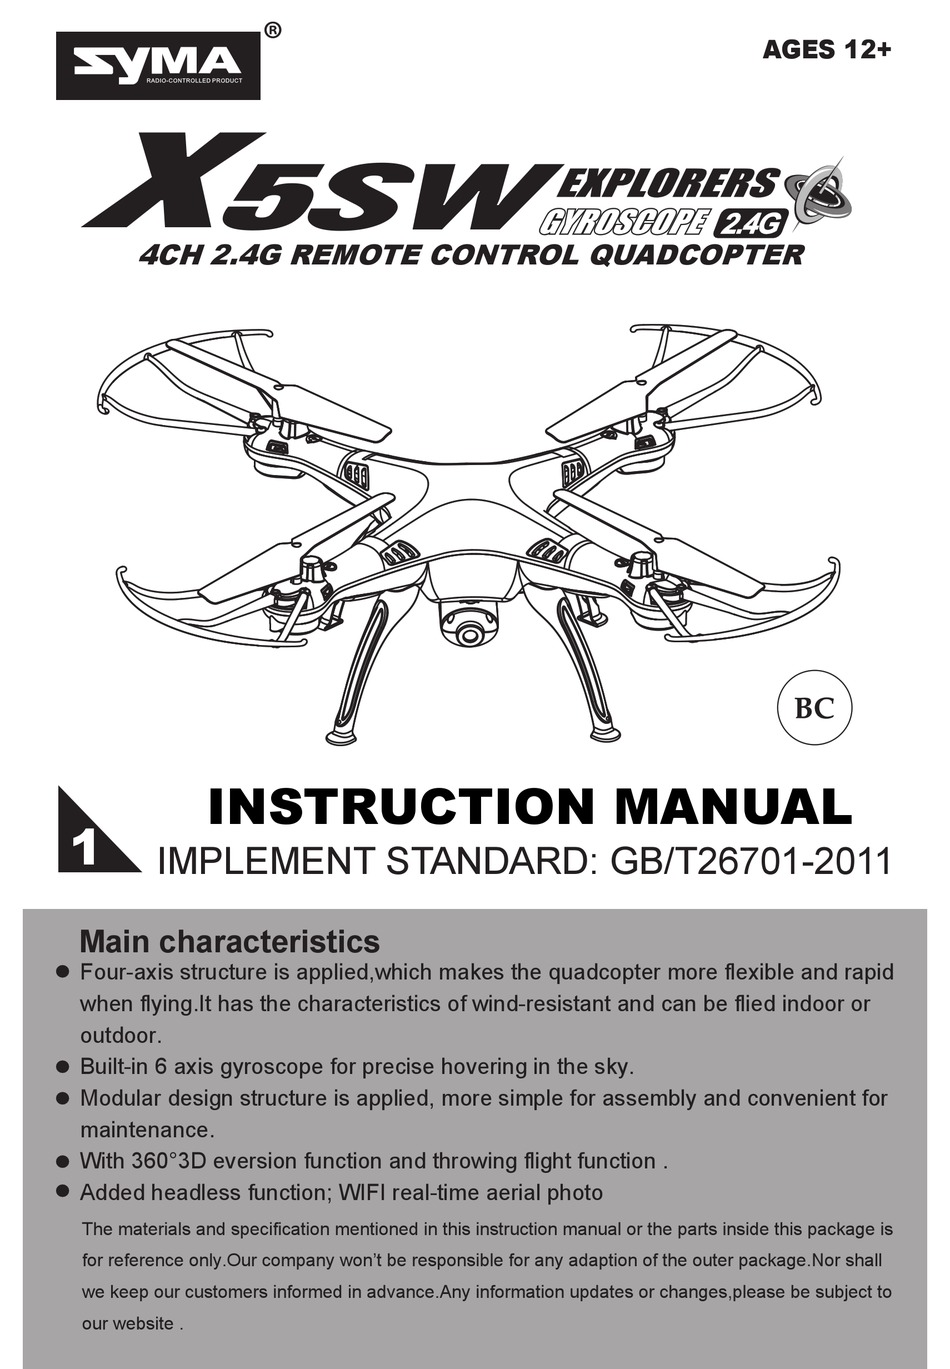 Manual Do Drone Syma X5sw Em Portugues - Picture Of Drone